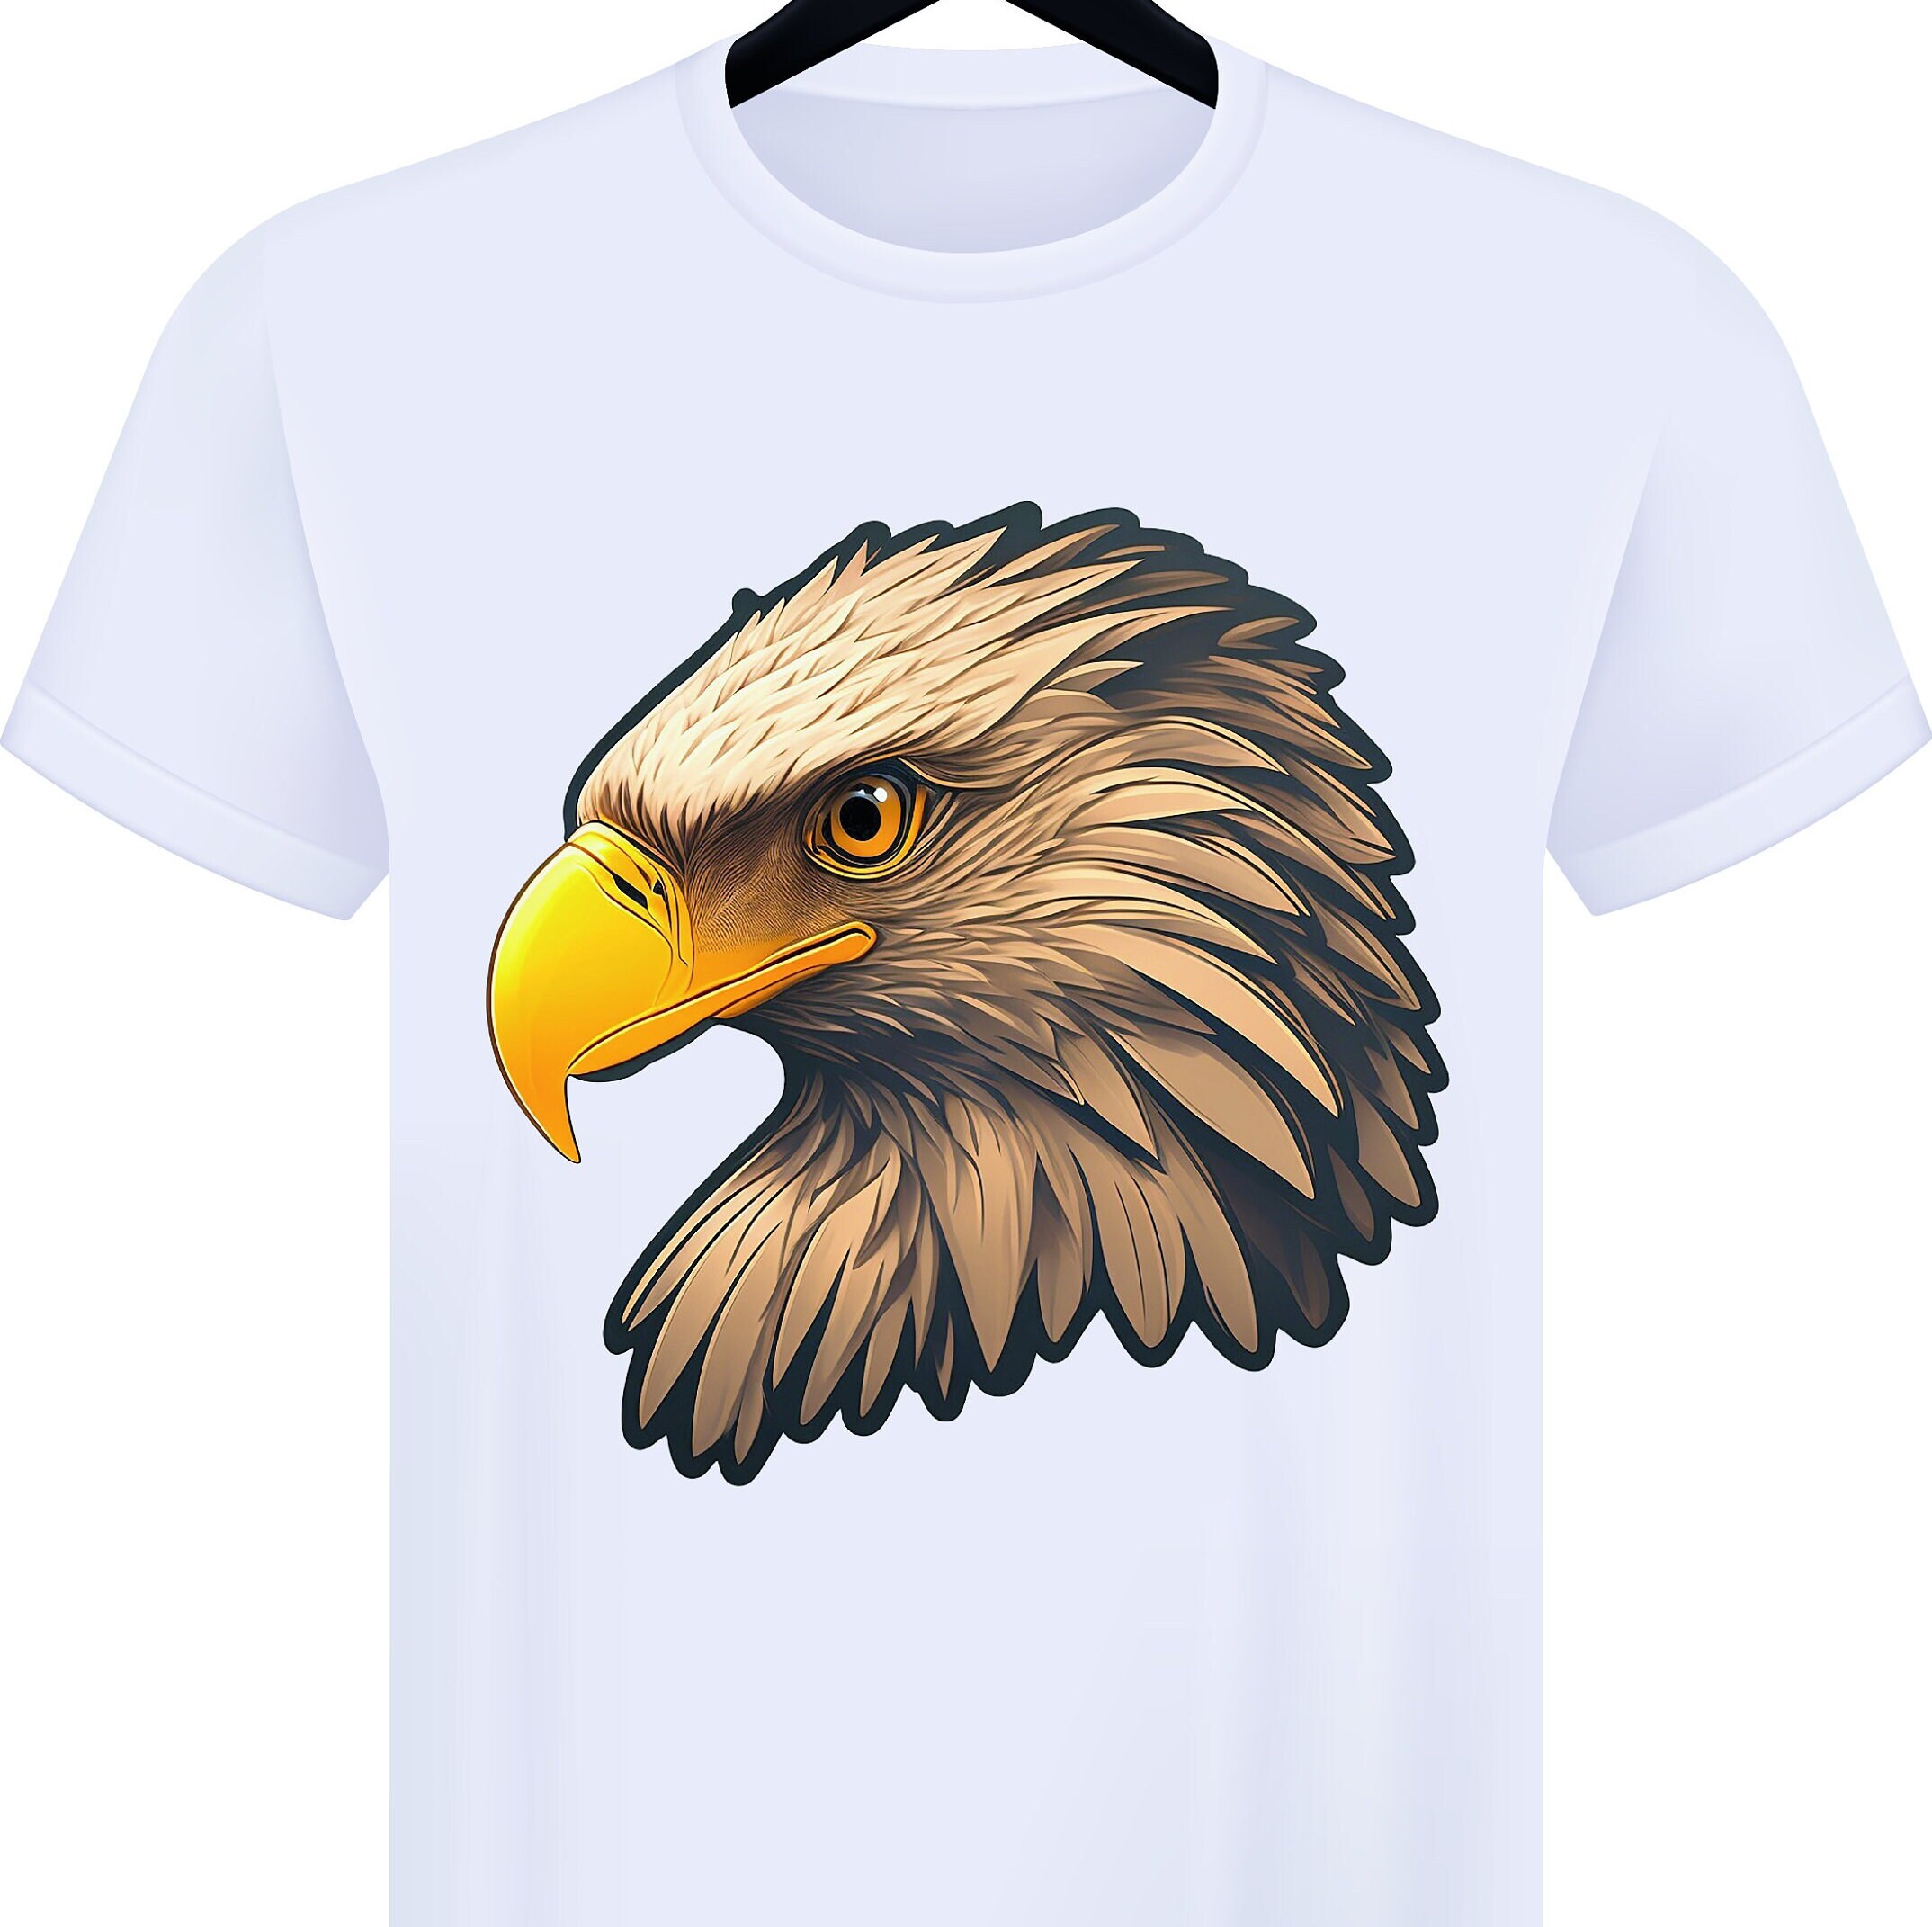 0101 Tshirt Design / Eagle Tshirt / Eagle Picture / Mockup - Etsy